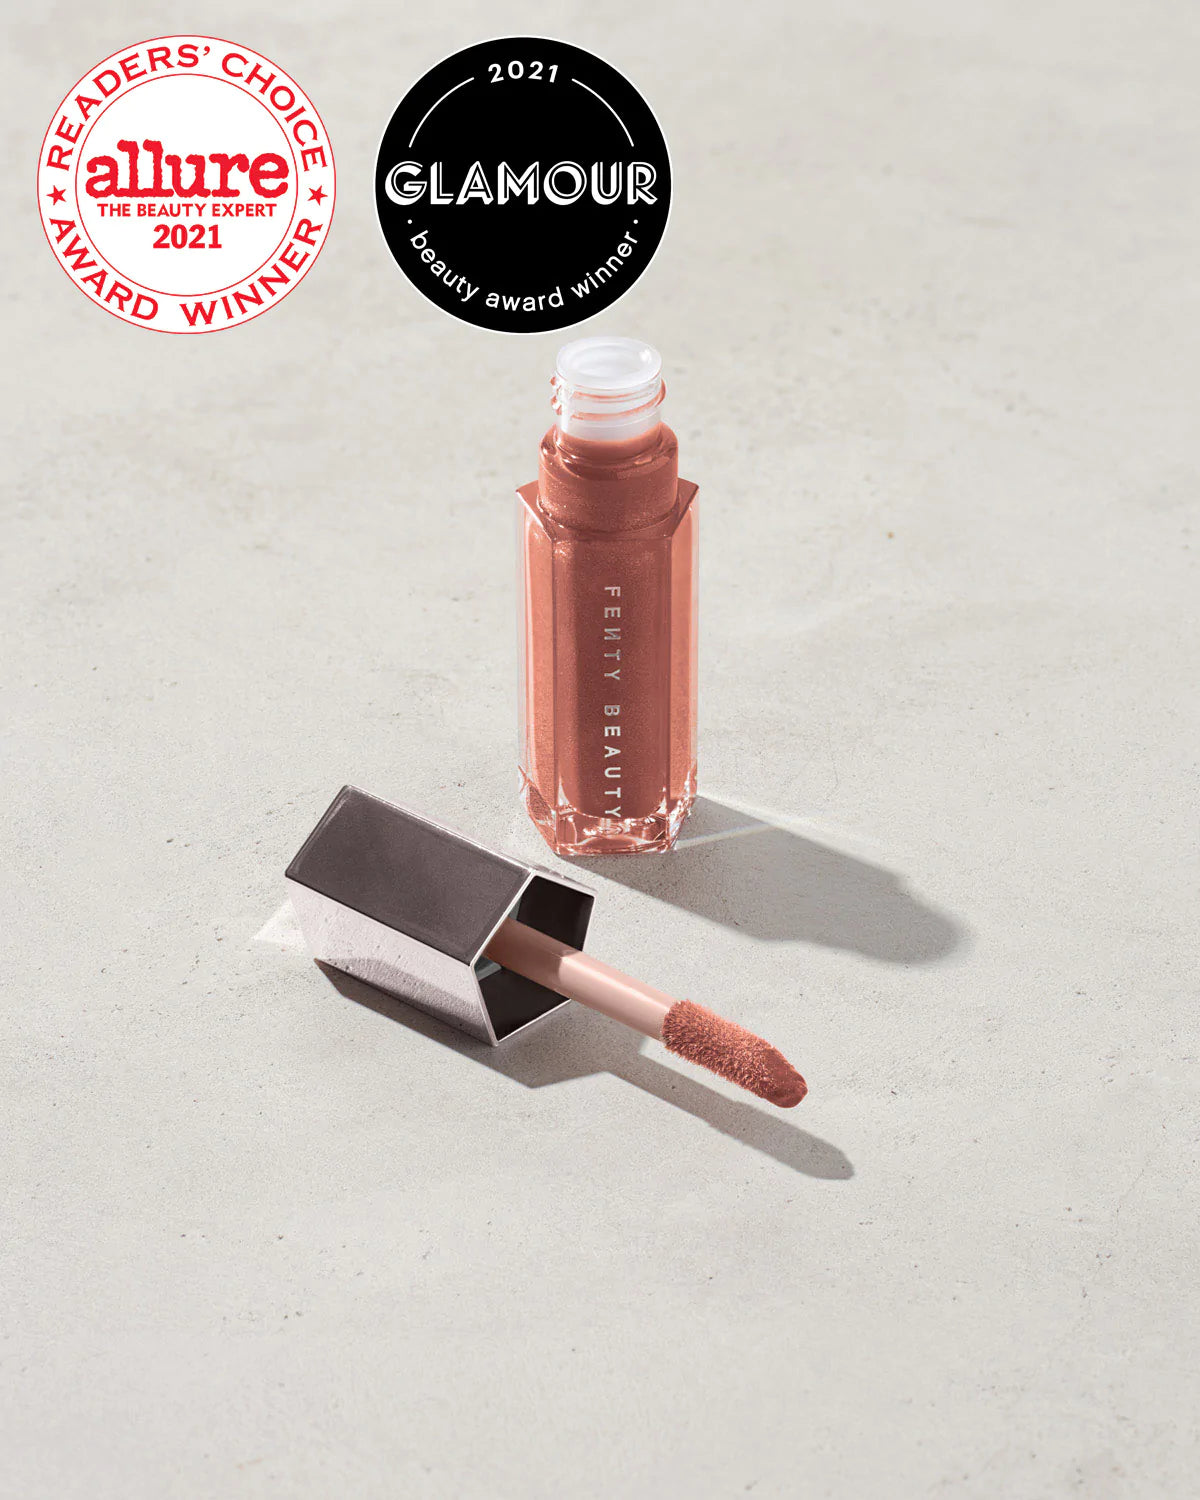 Fenty Beauty by Rihanna | Gloss Bomb Universal Lip Luminizer |  Fenty Glow (shimmering rose nude)